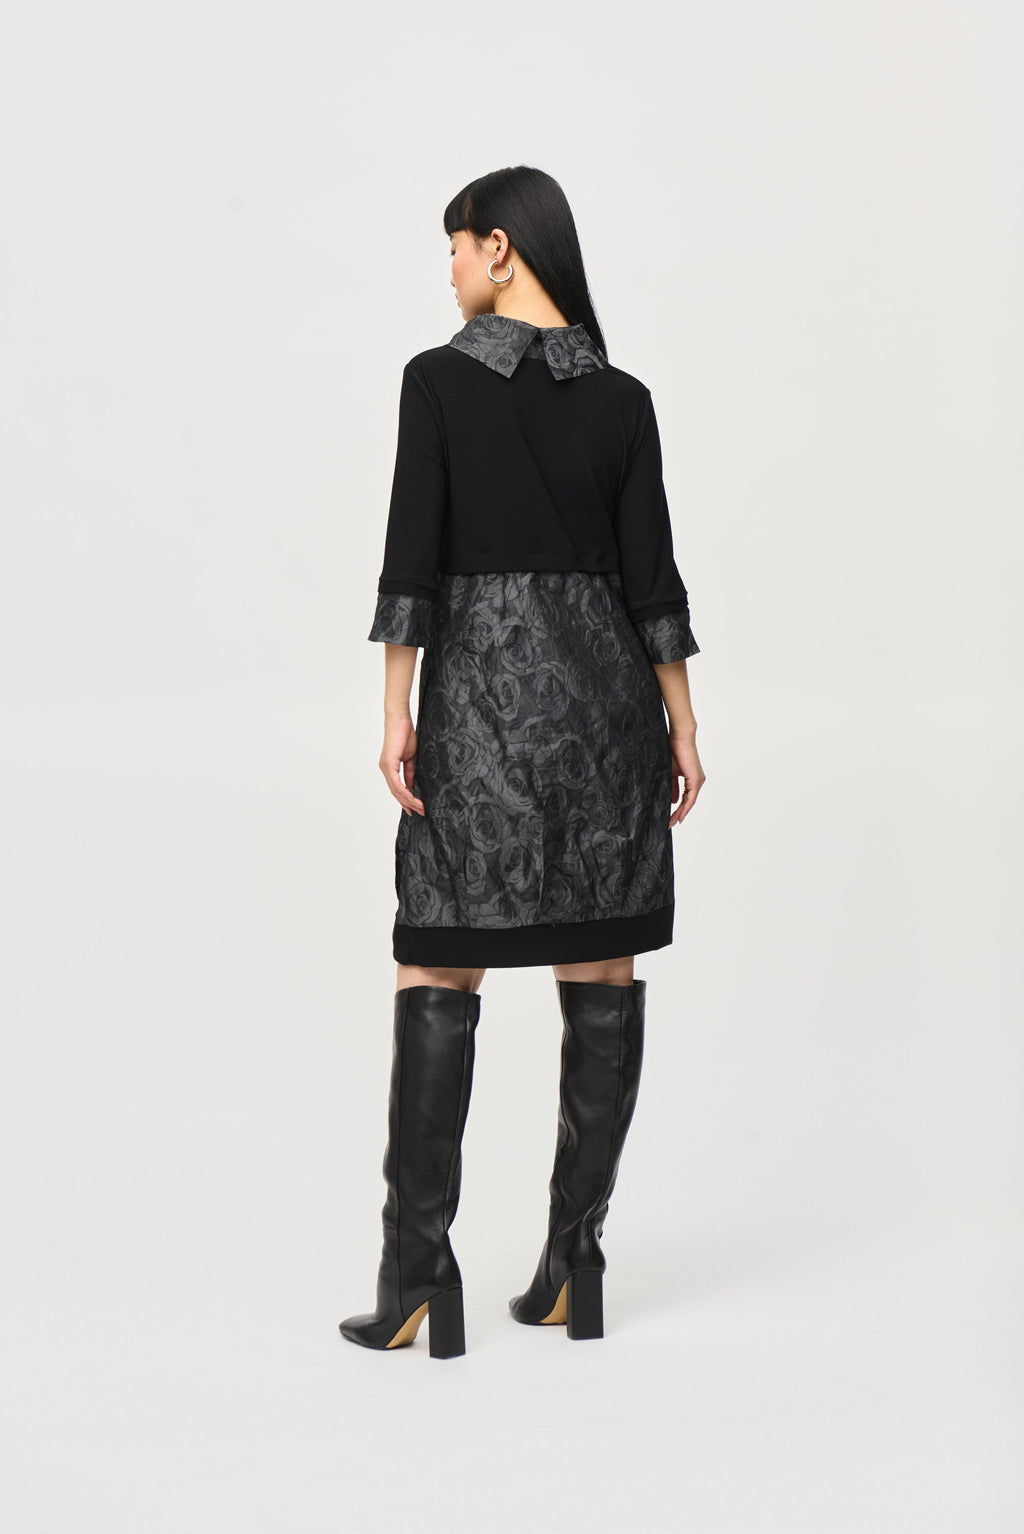 Joseph Ribkoff Black/Grey Floral Print Cocoon Dress Style 243126